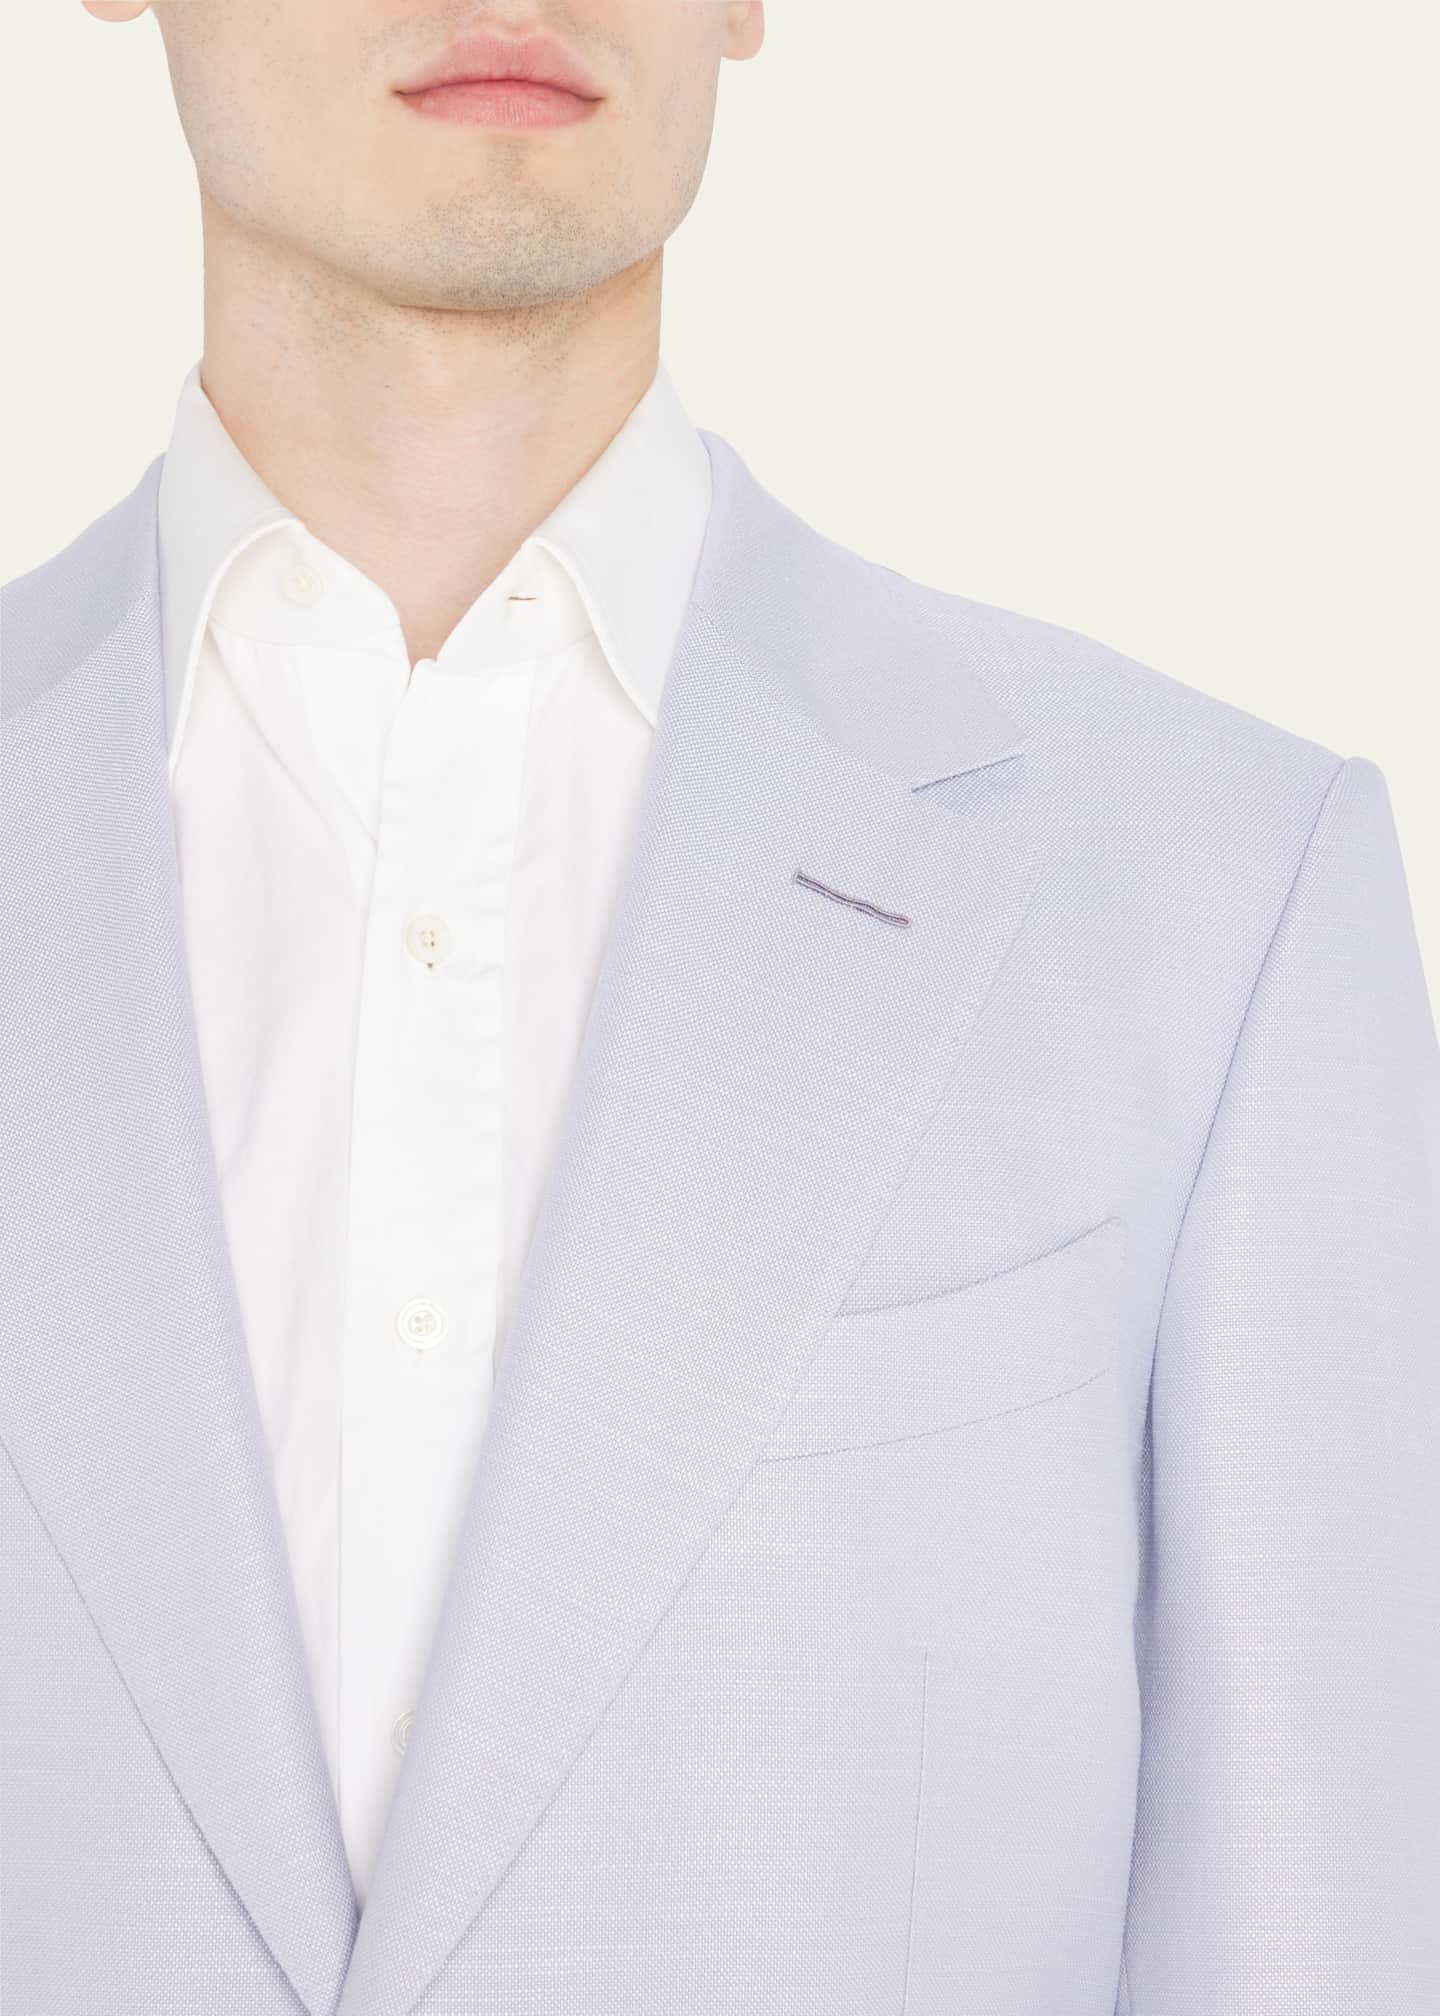 TOM FORD Men's Shelton Panama Silk-Blend Suit - Bergdorf Goodman